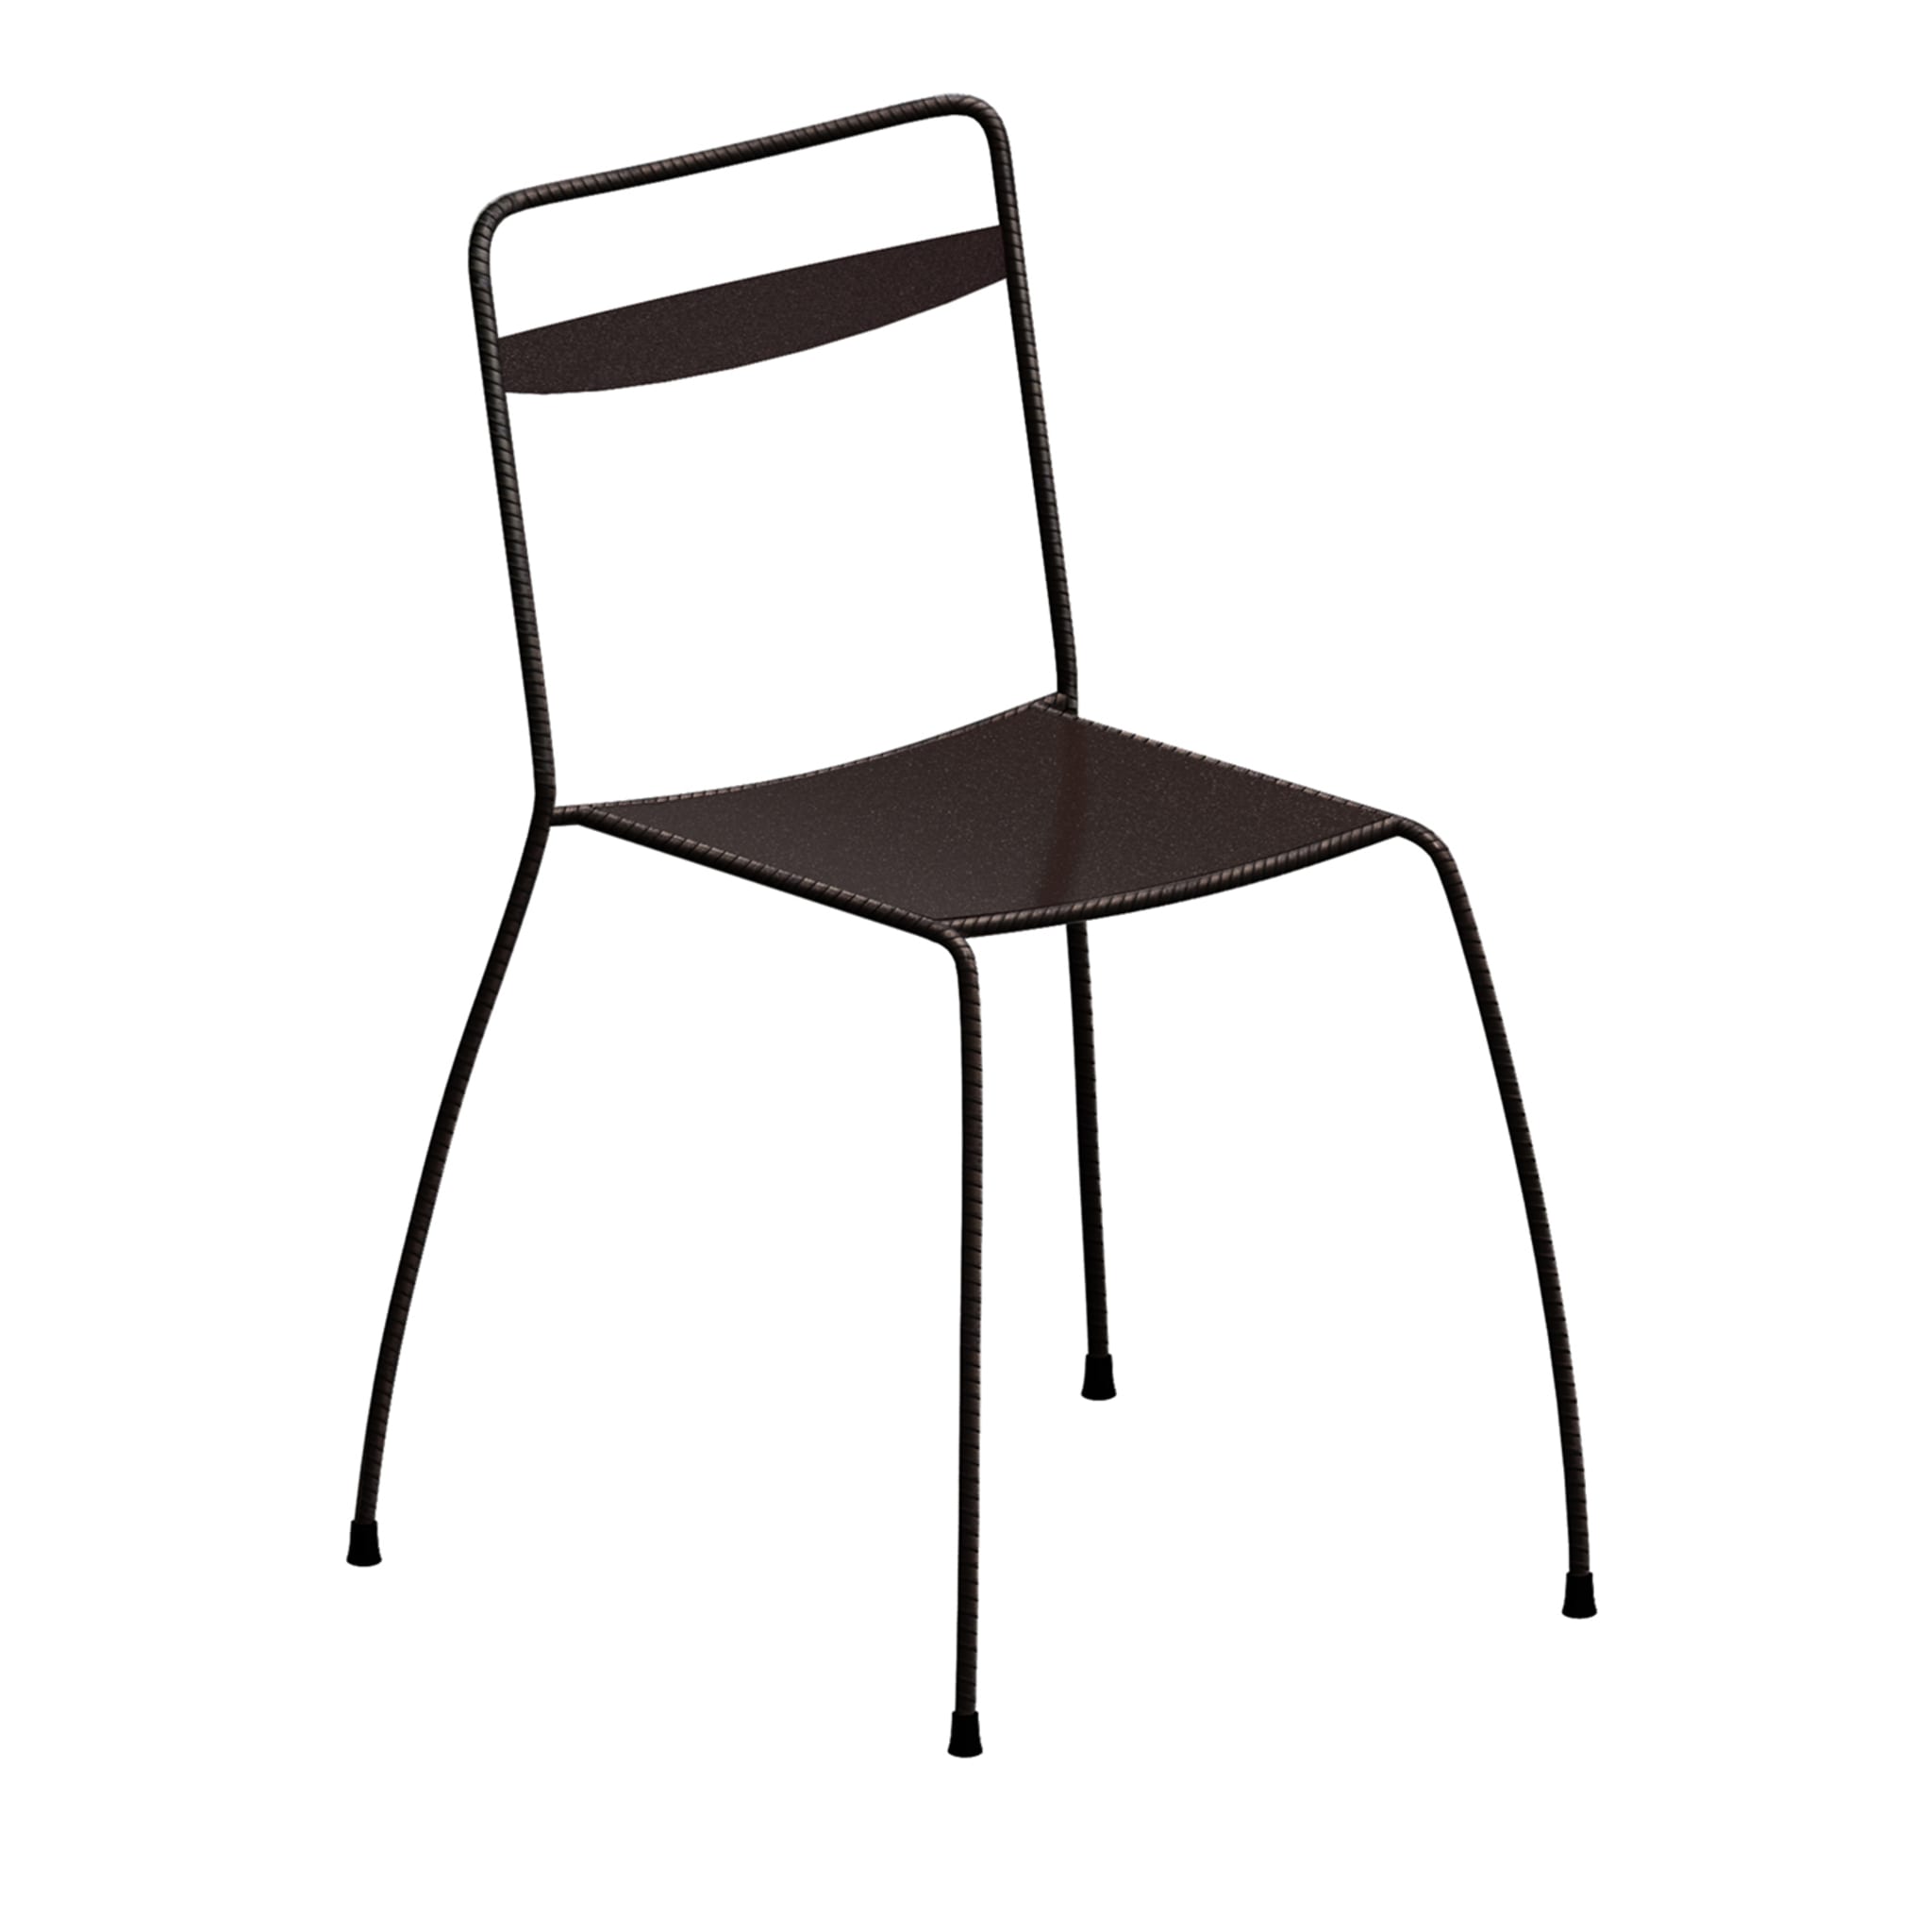 Tondella Brown Chair by Maurizio Peregalli - Main view